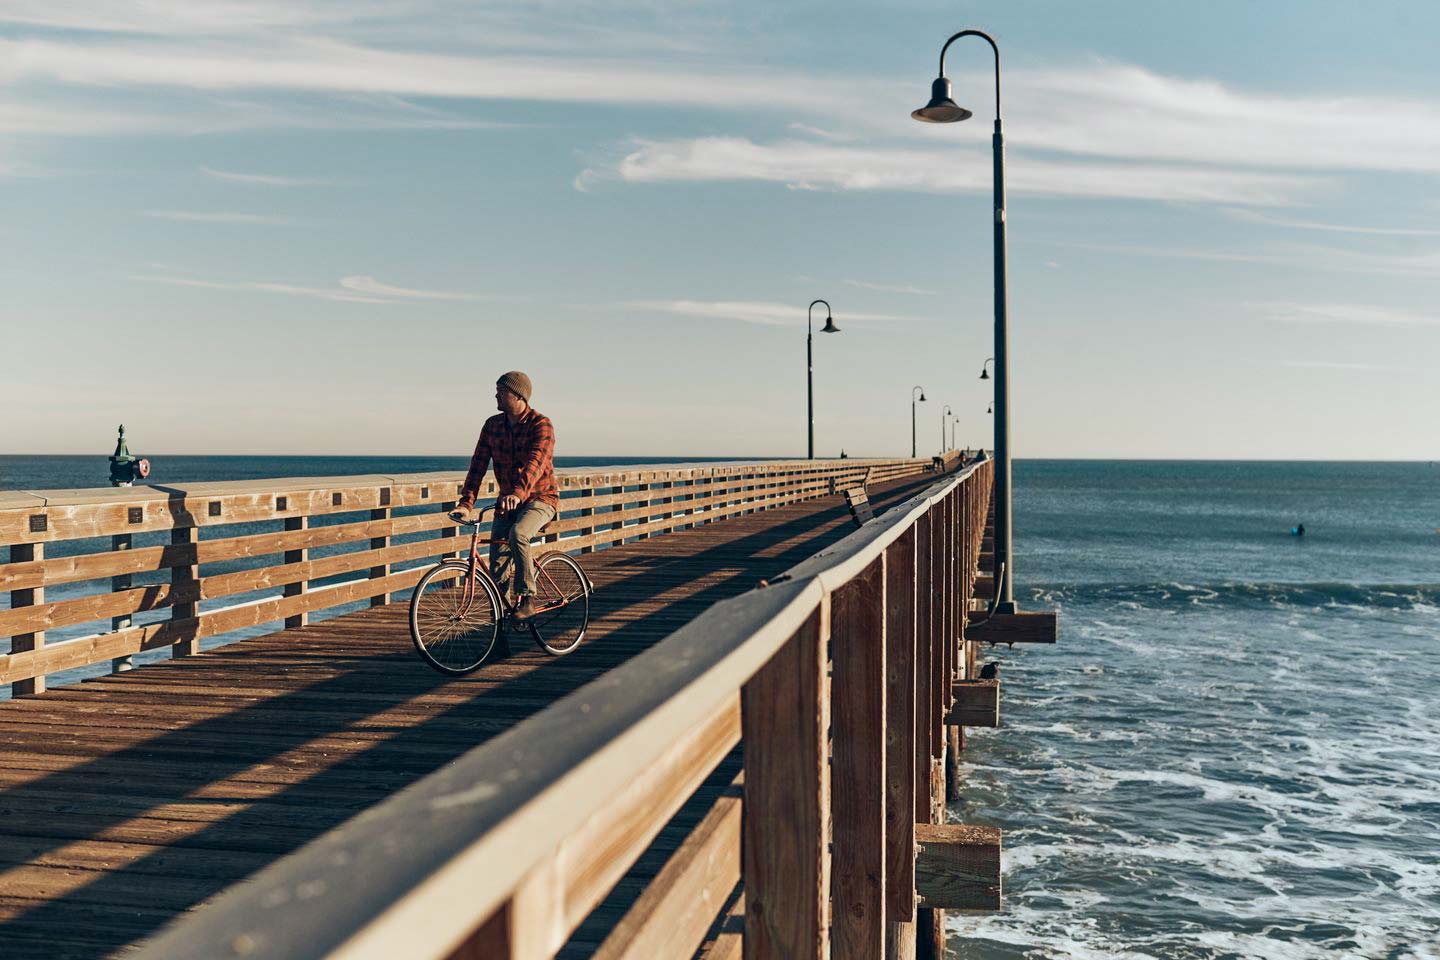 Aaron Jackson riding a bike on a pier